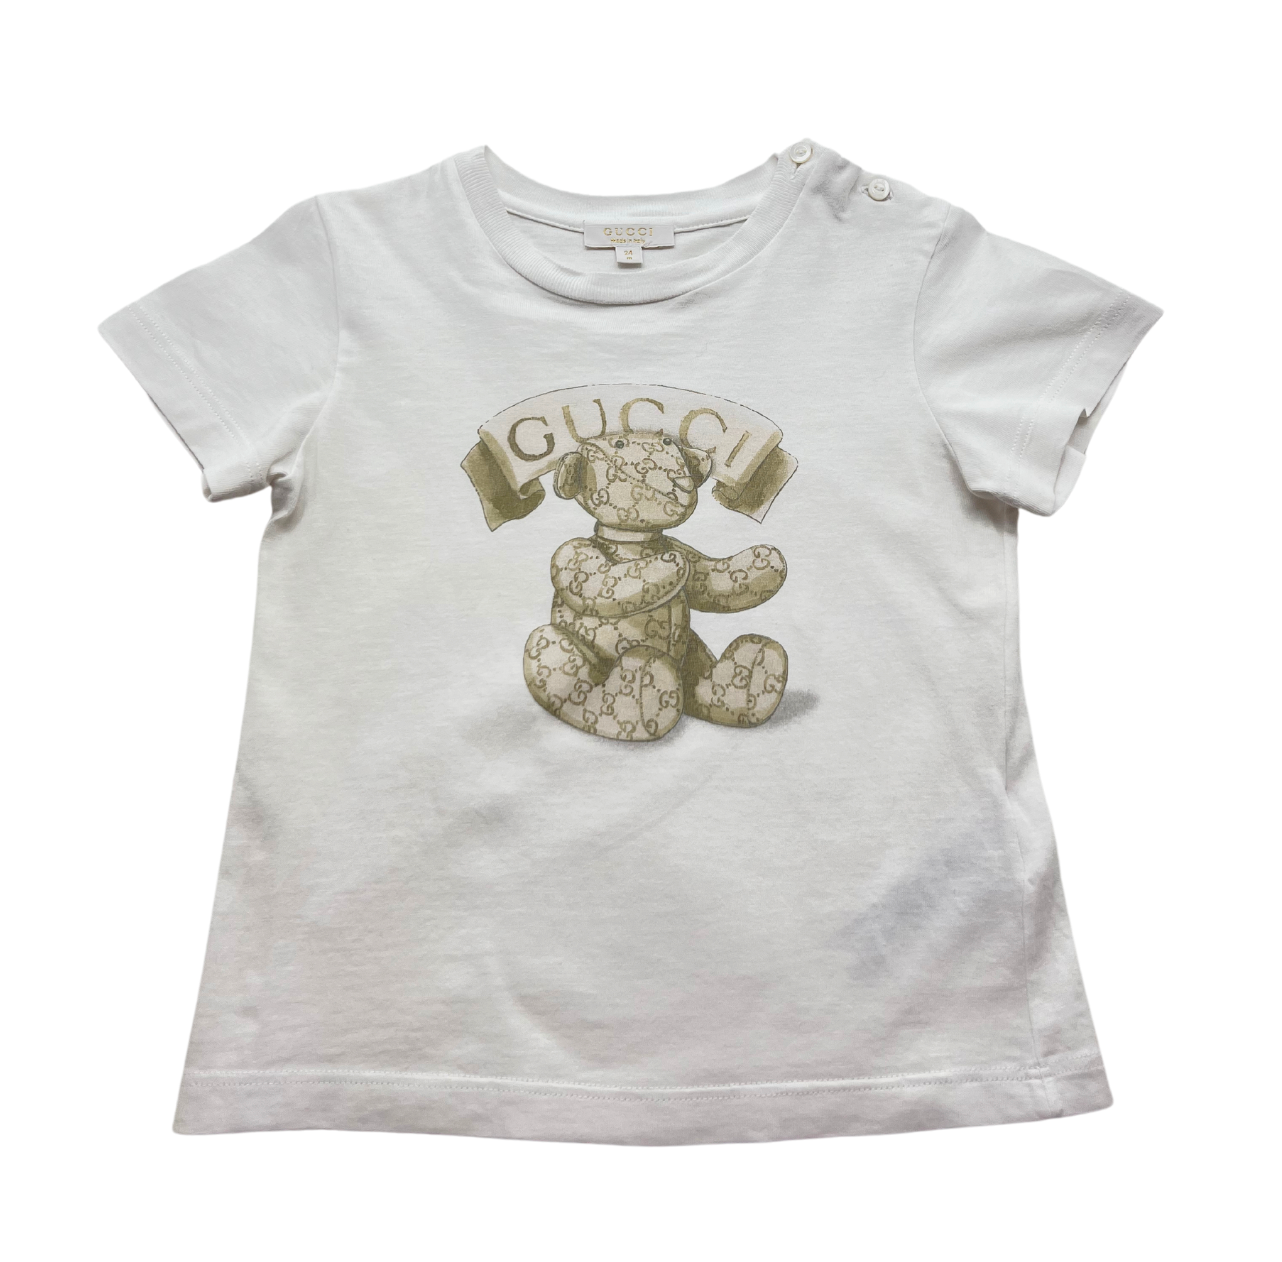 GUCCI - Teddy bear T-shirt - 2 years